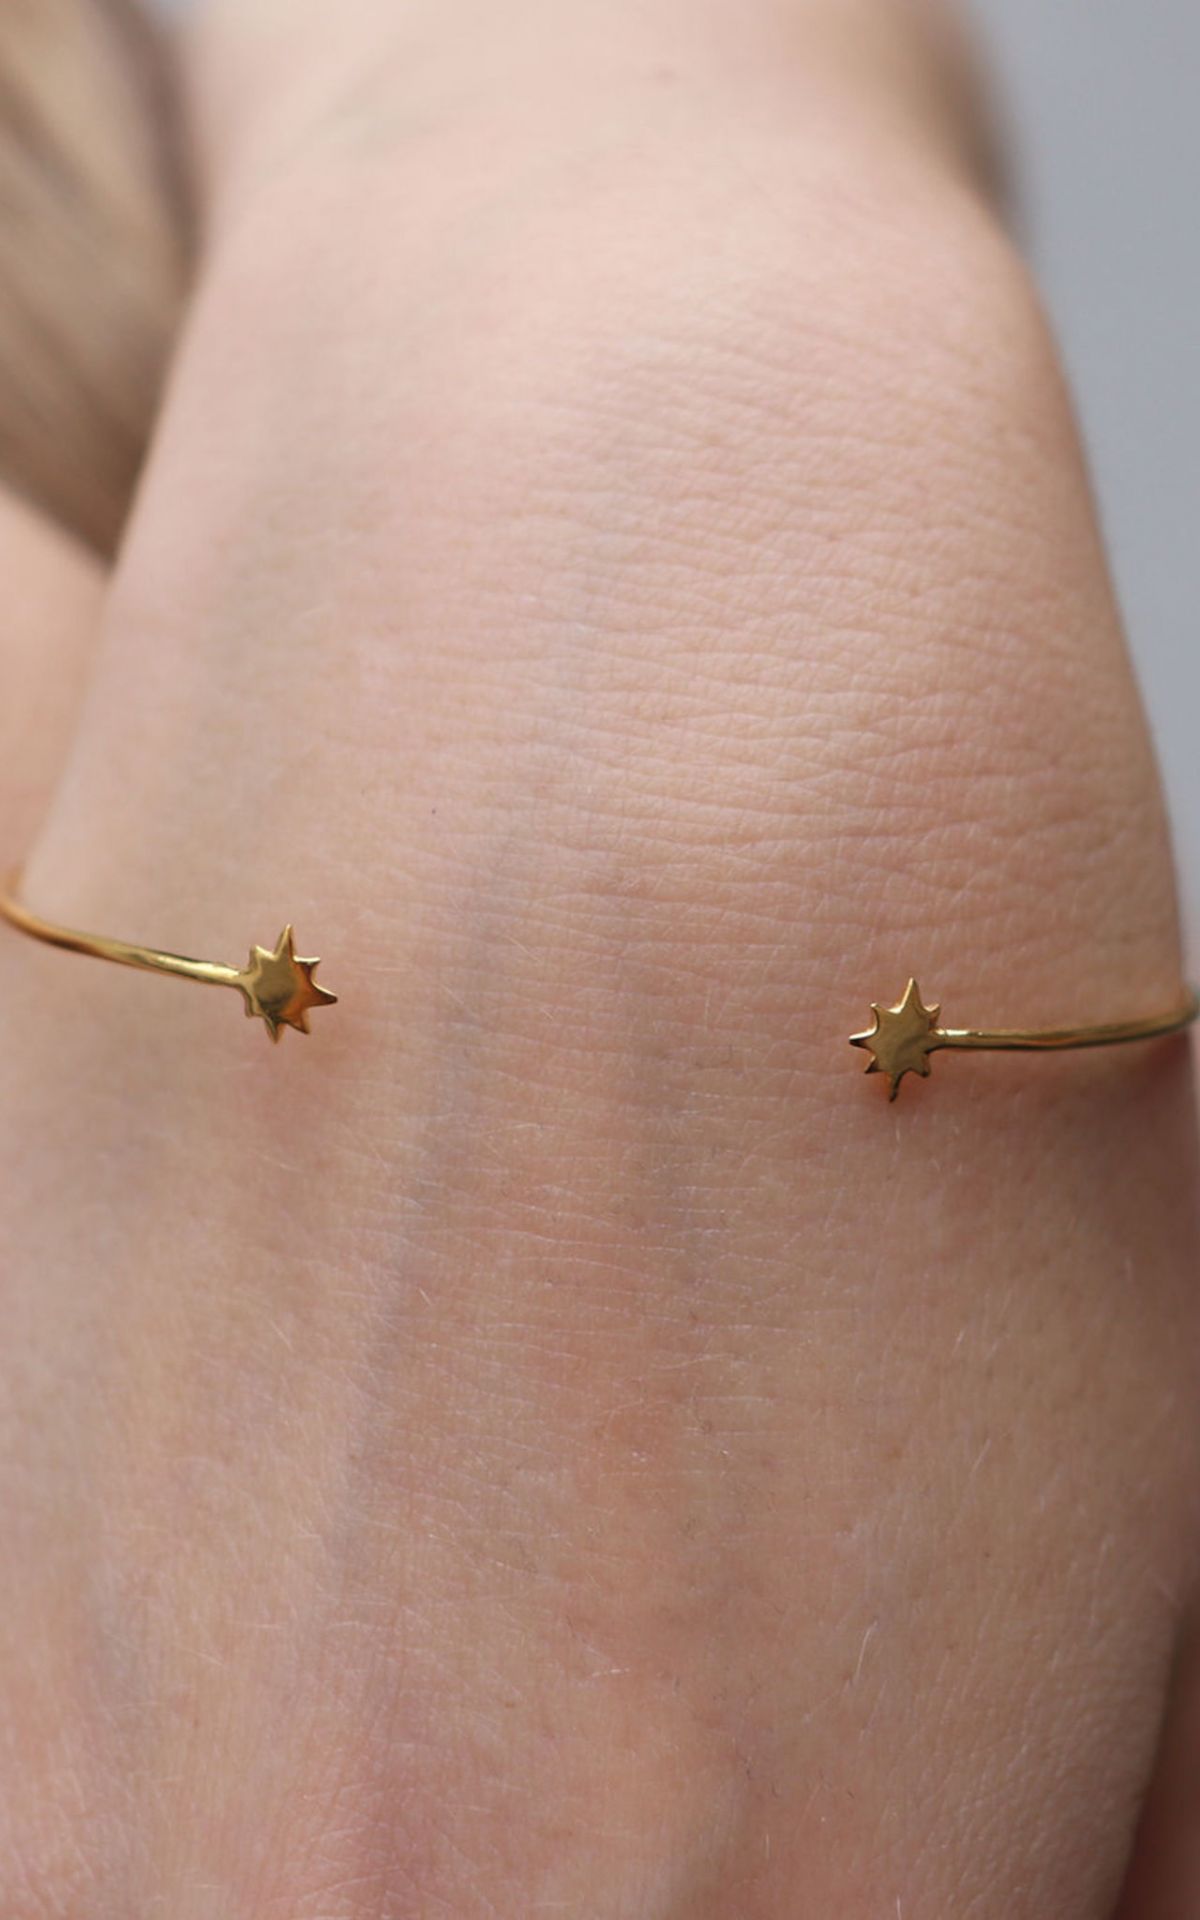 Seema Star Bracelet - Gold